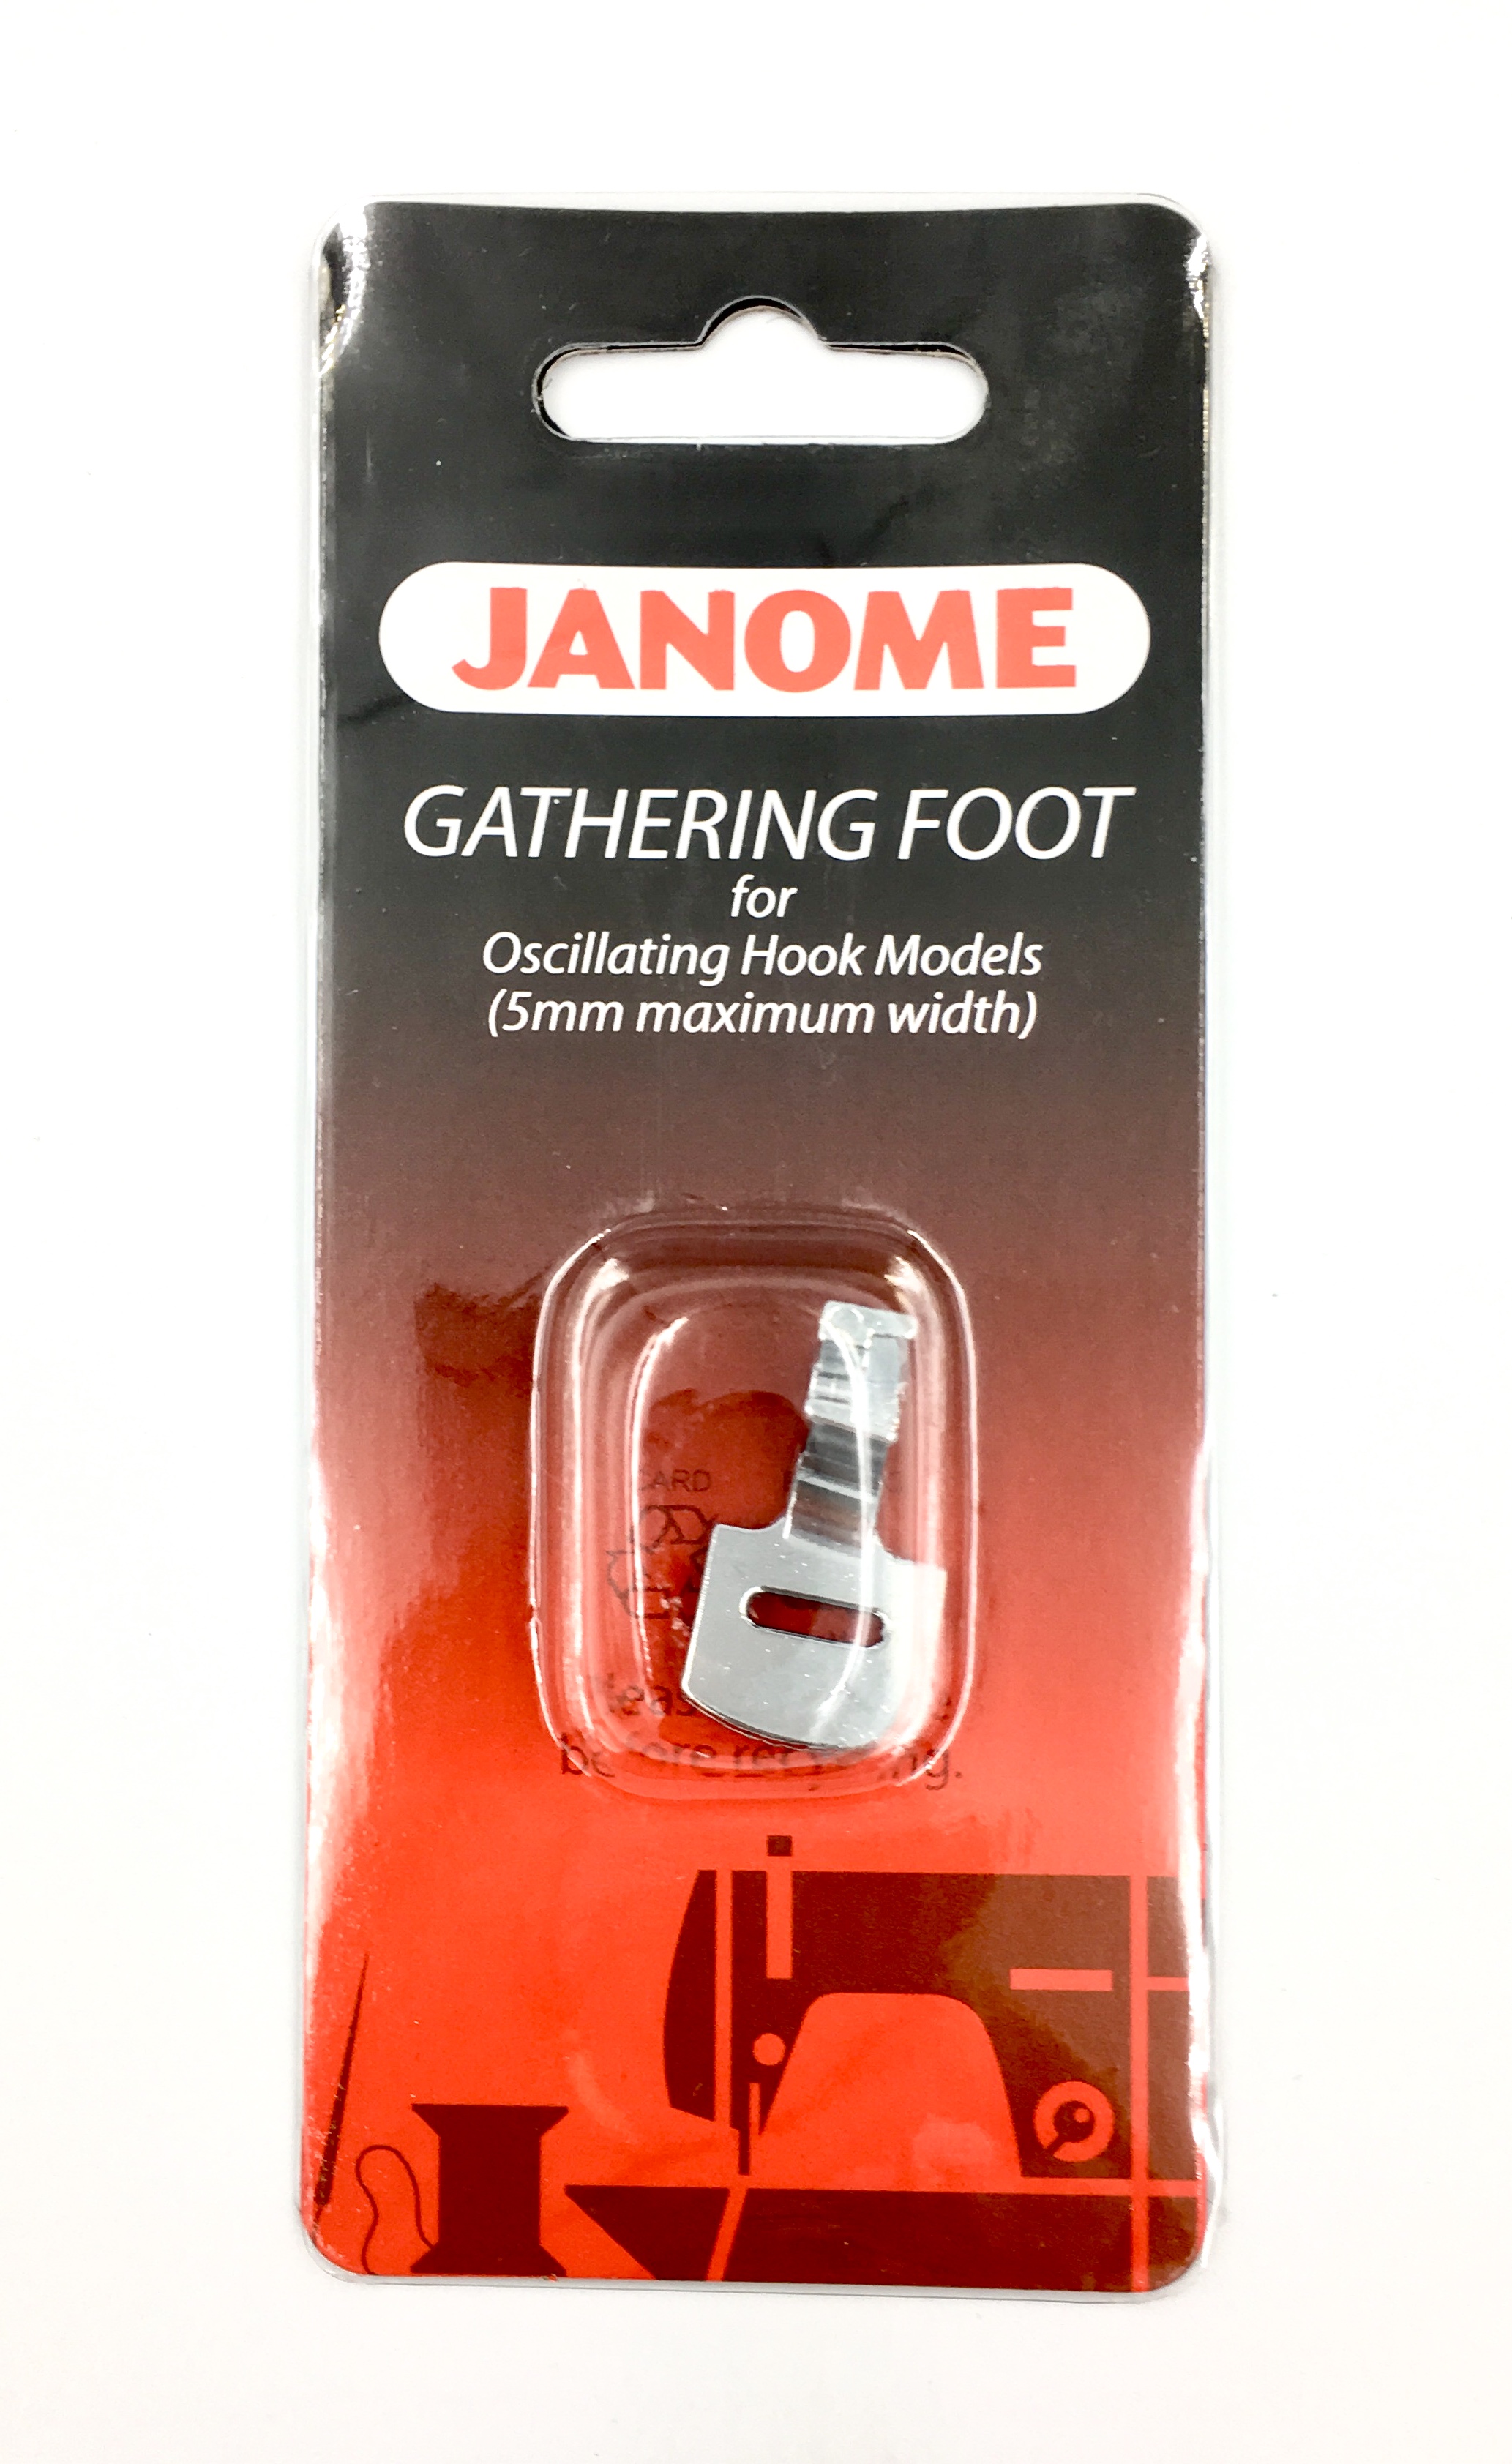 Gathering Foot